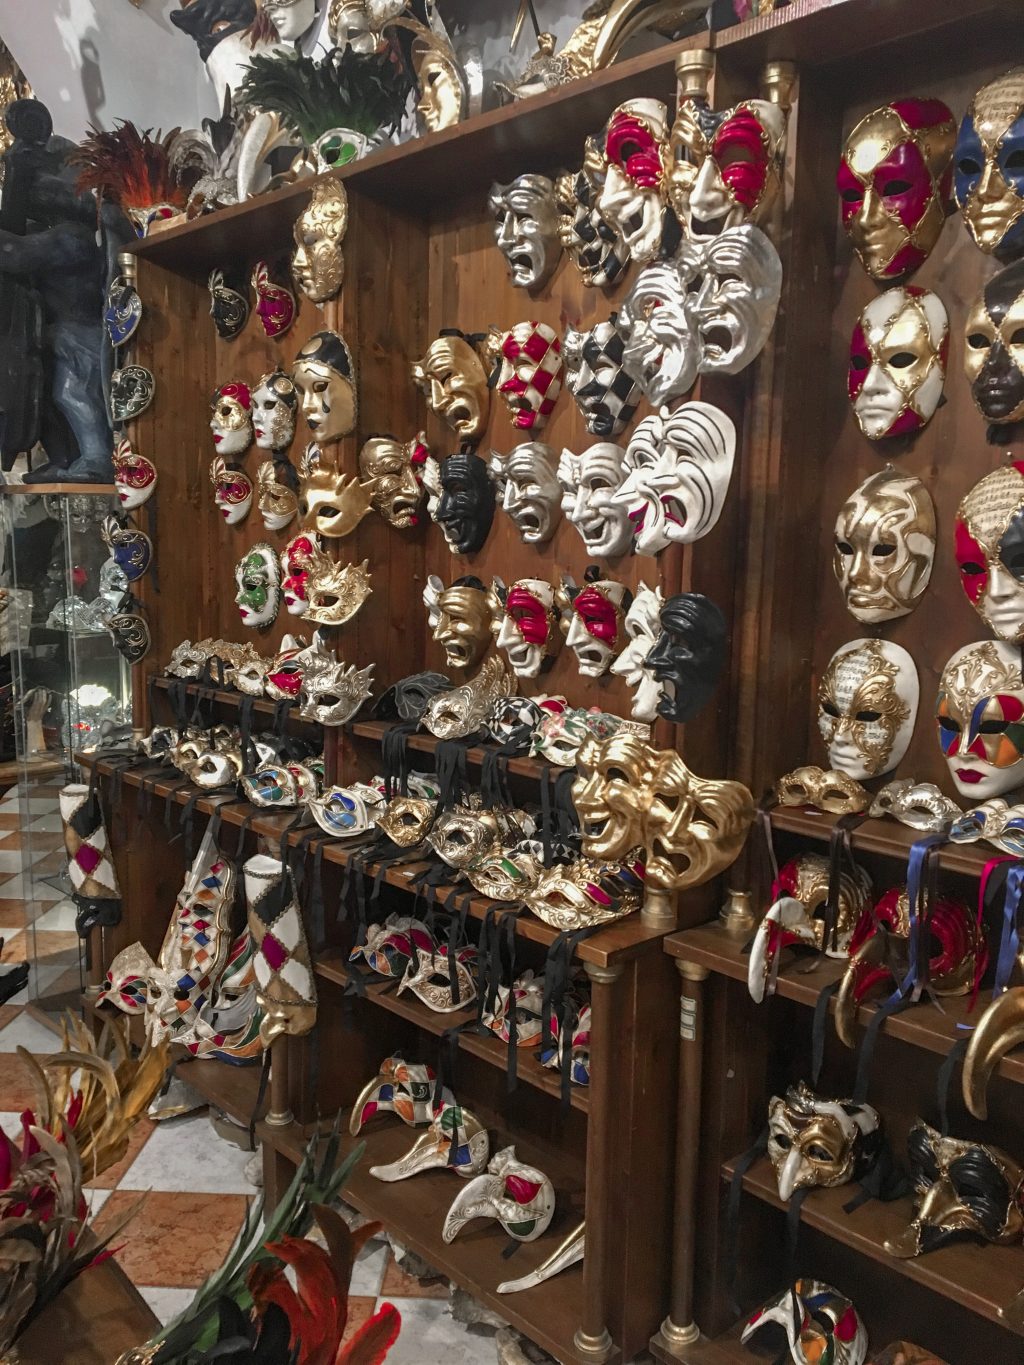 Carnevale mask display in Venice shop